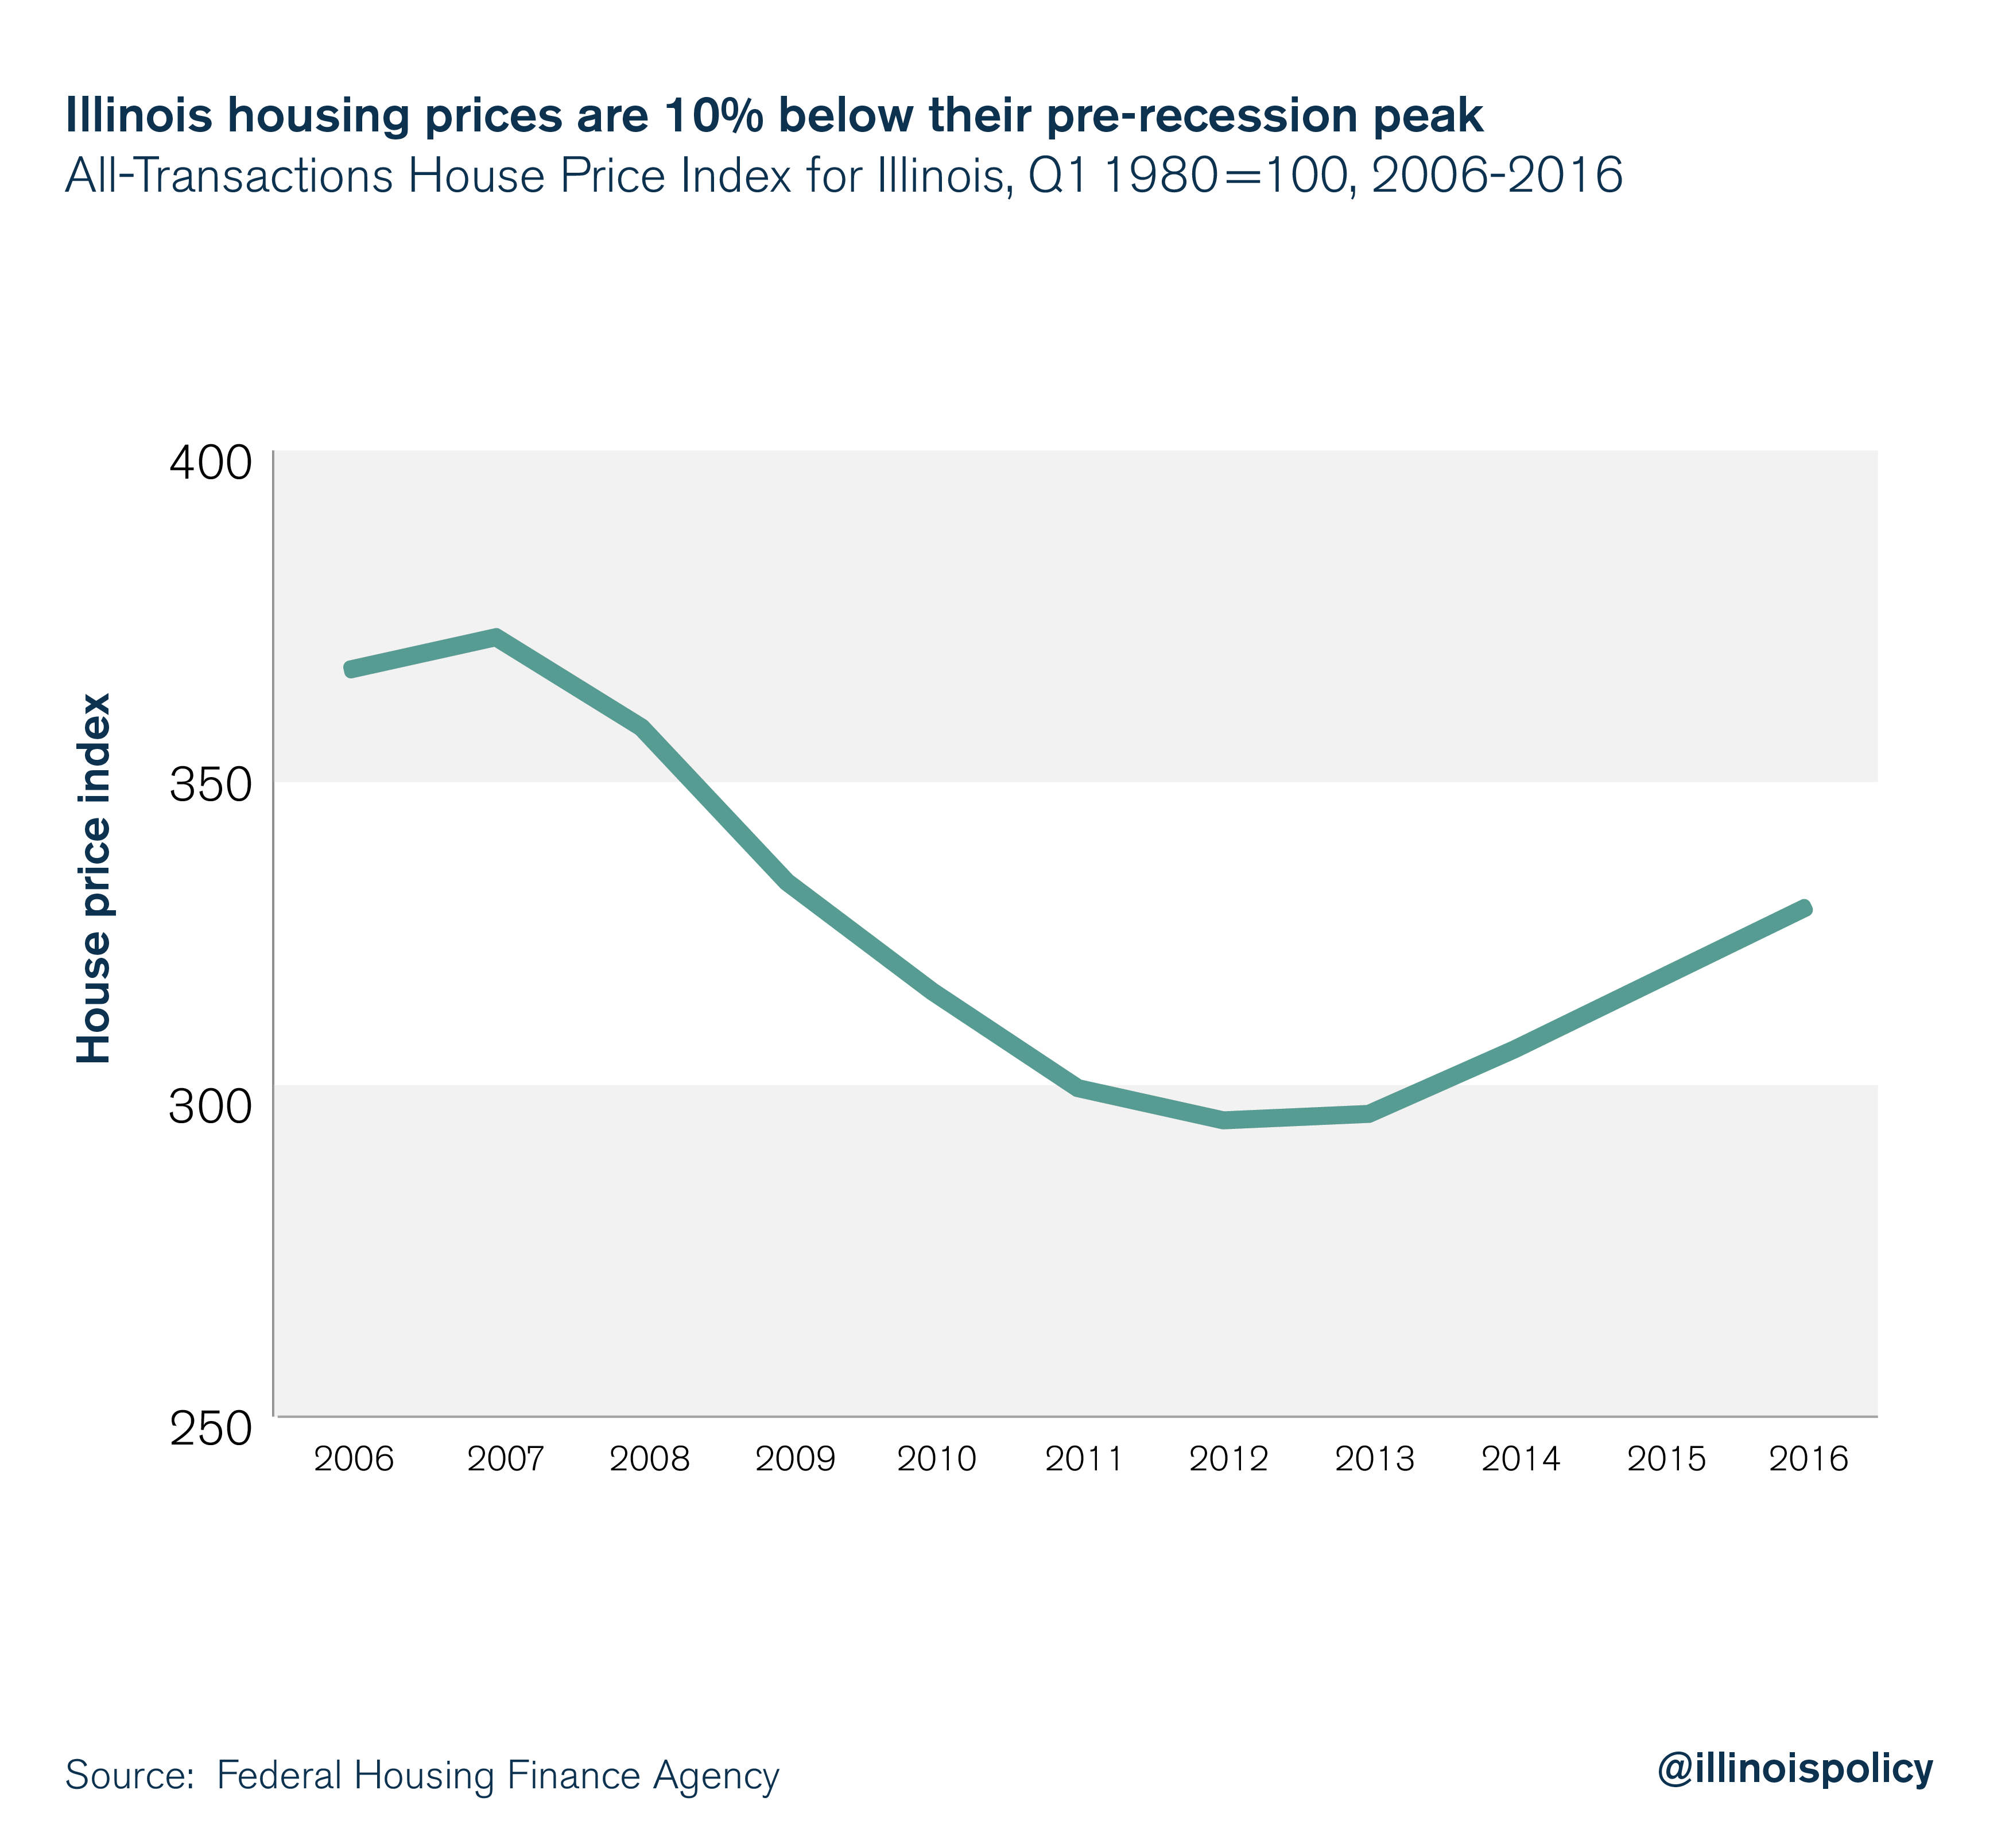 Illinois housing prices are 10% below their pre-recession peak